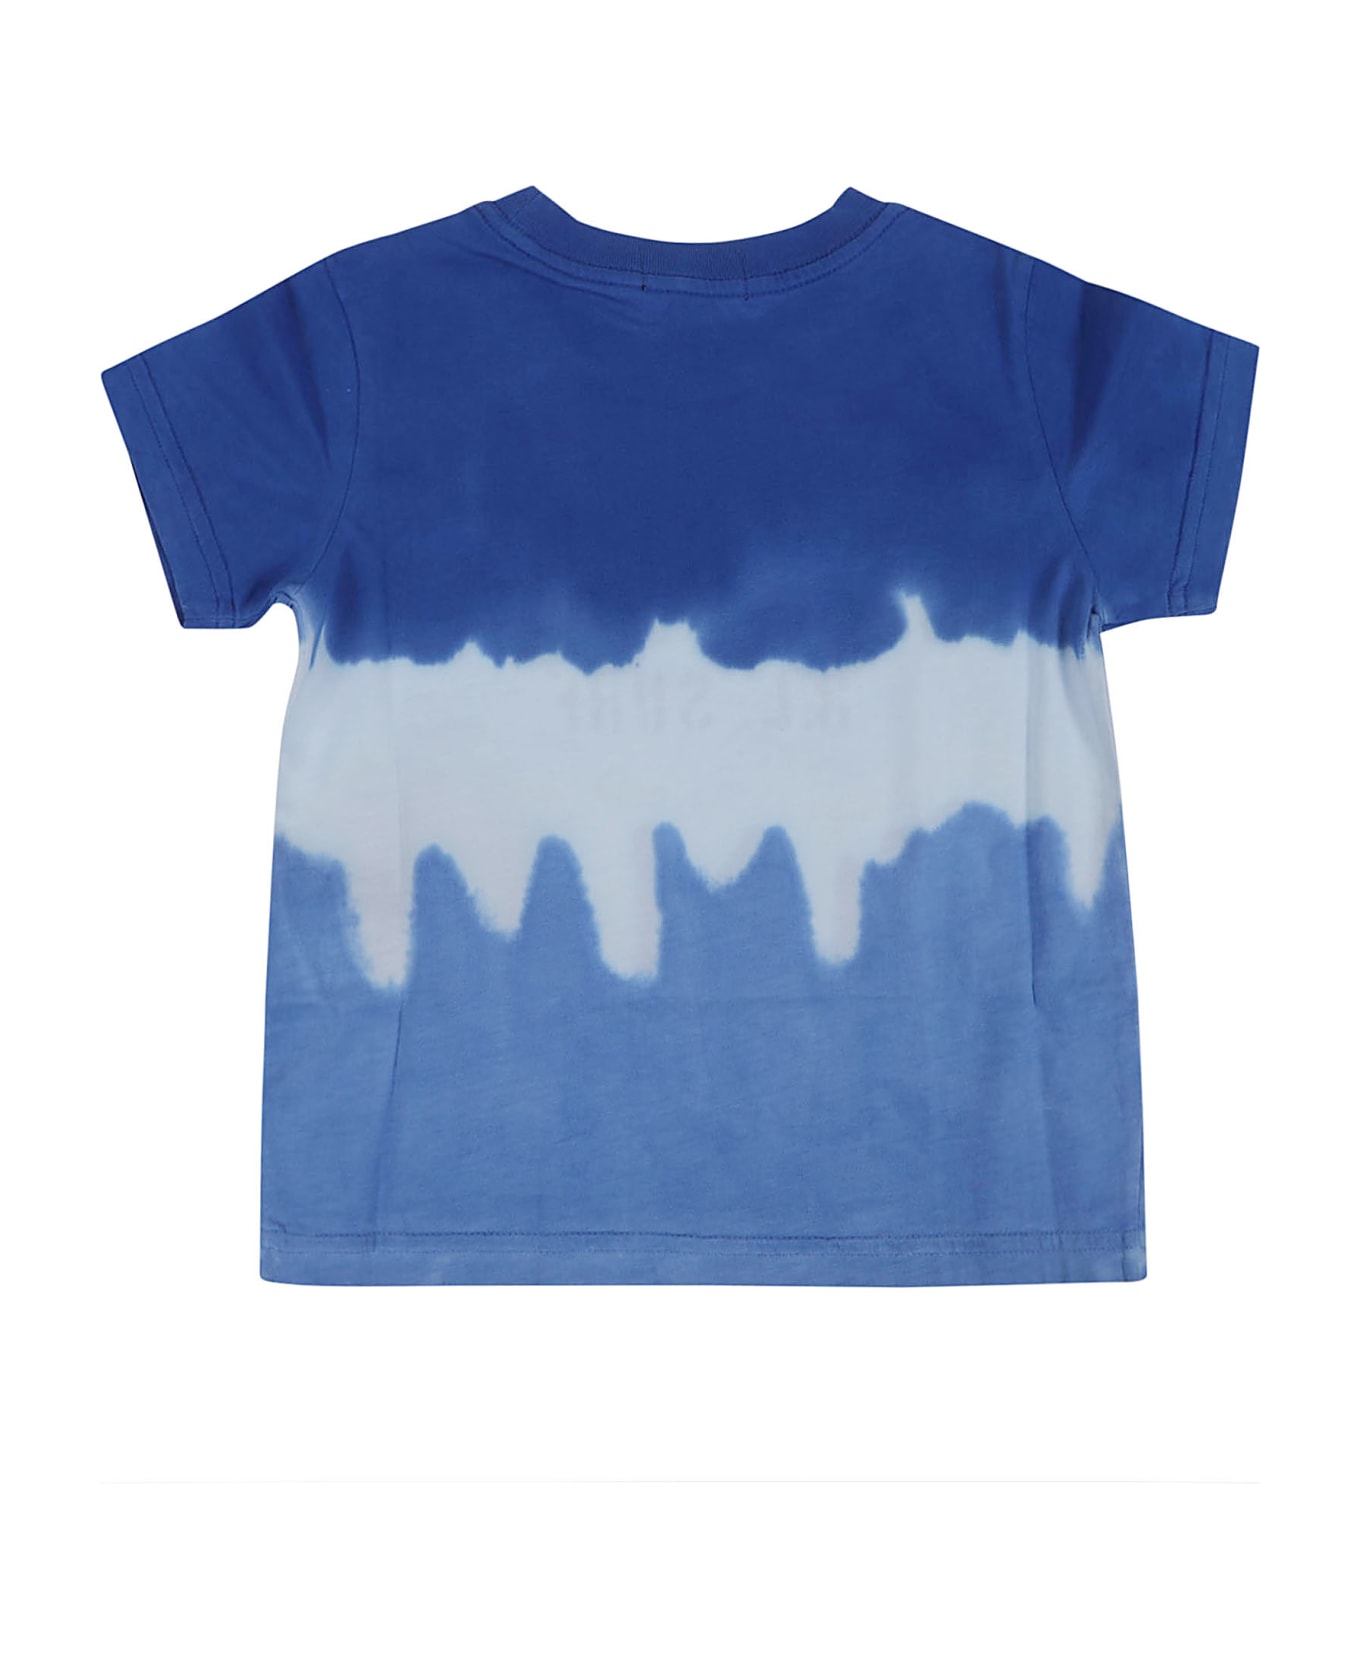 Ralph Lauren Sscnm1-knit Shirts-t-shirt - Heritage Blue Multi